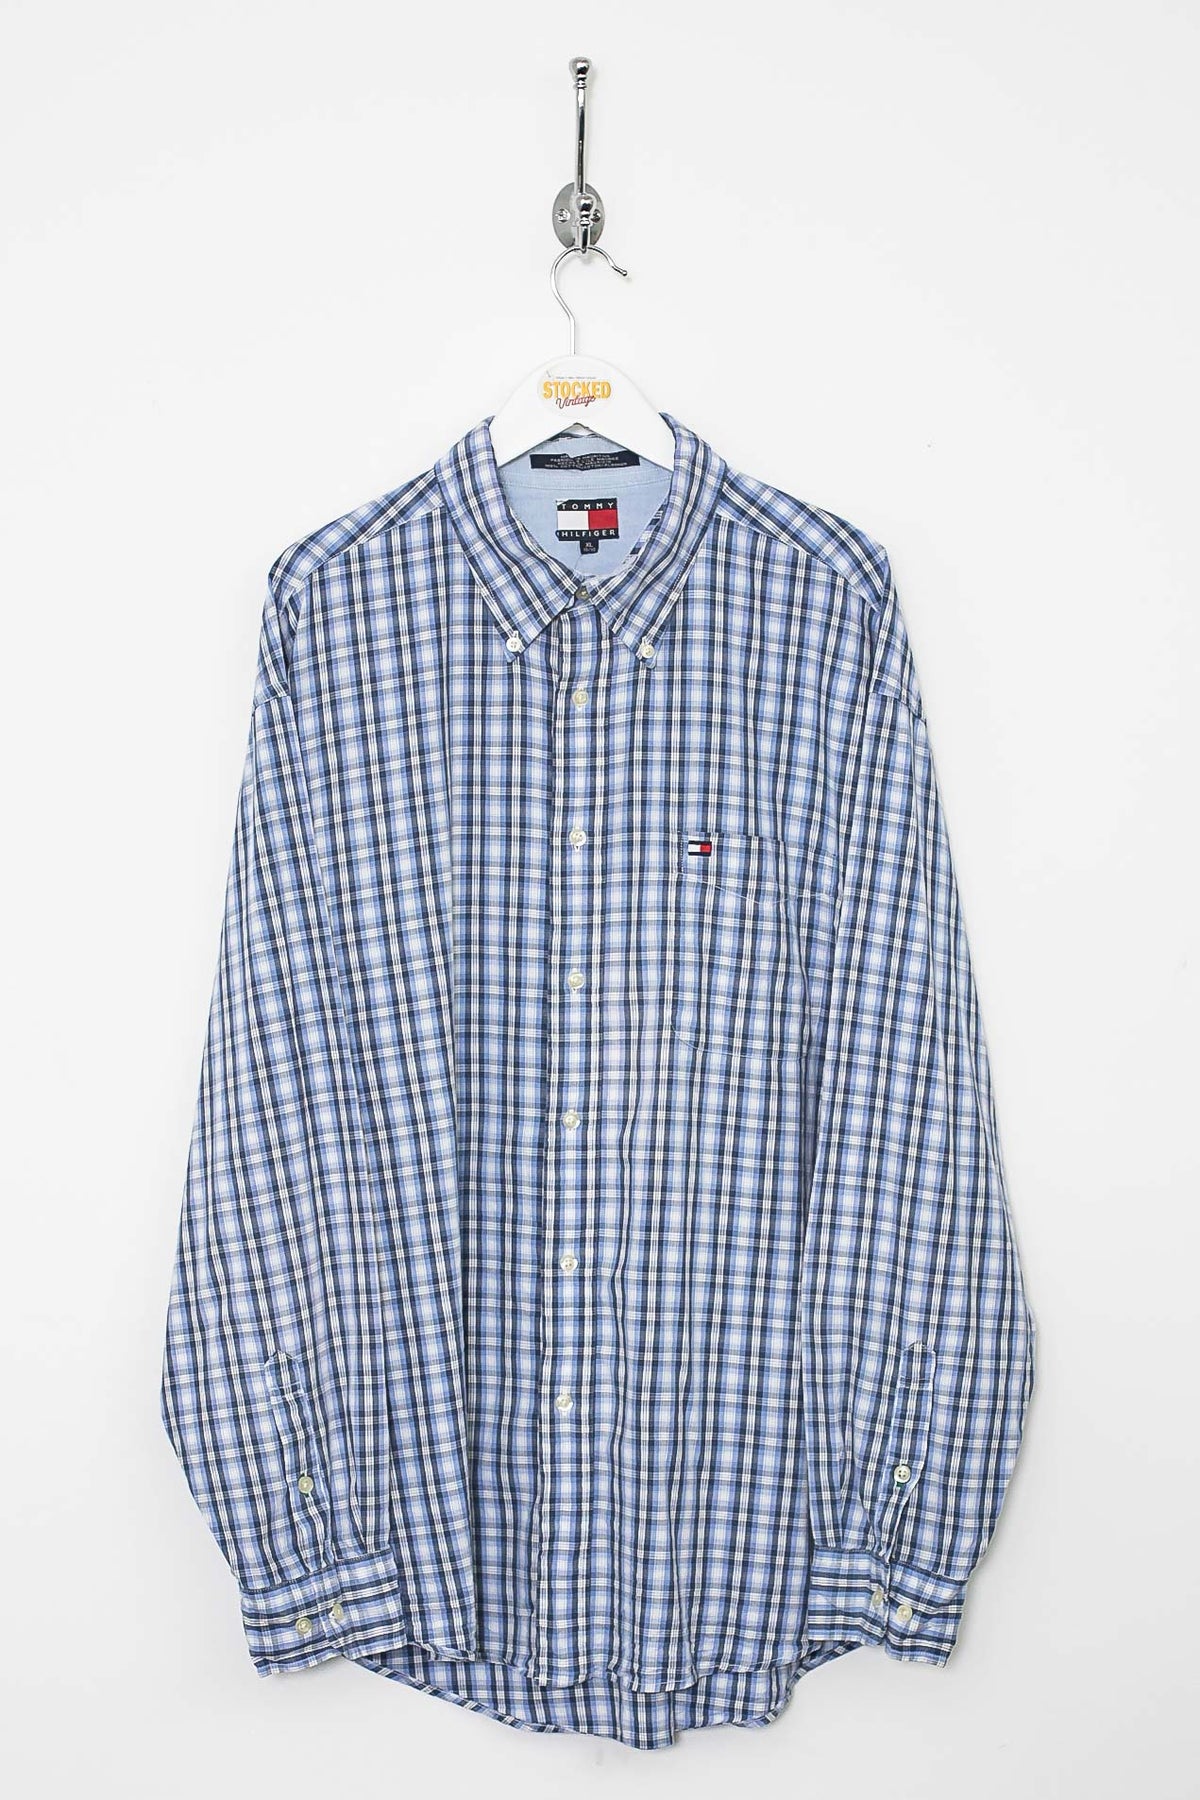 90s Tommy Hilfiger Shirt (XL)